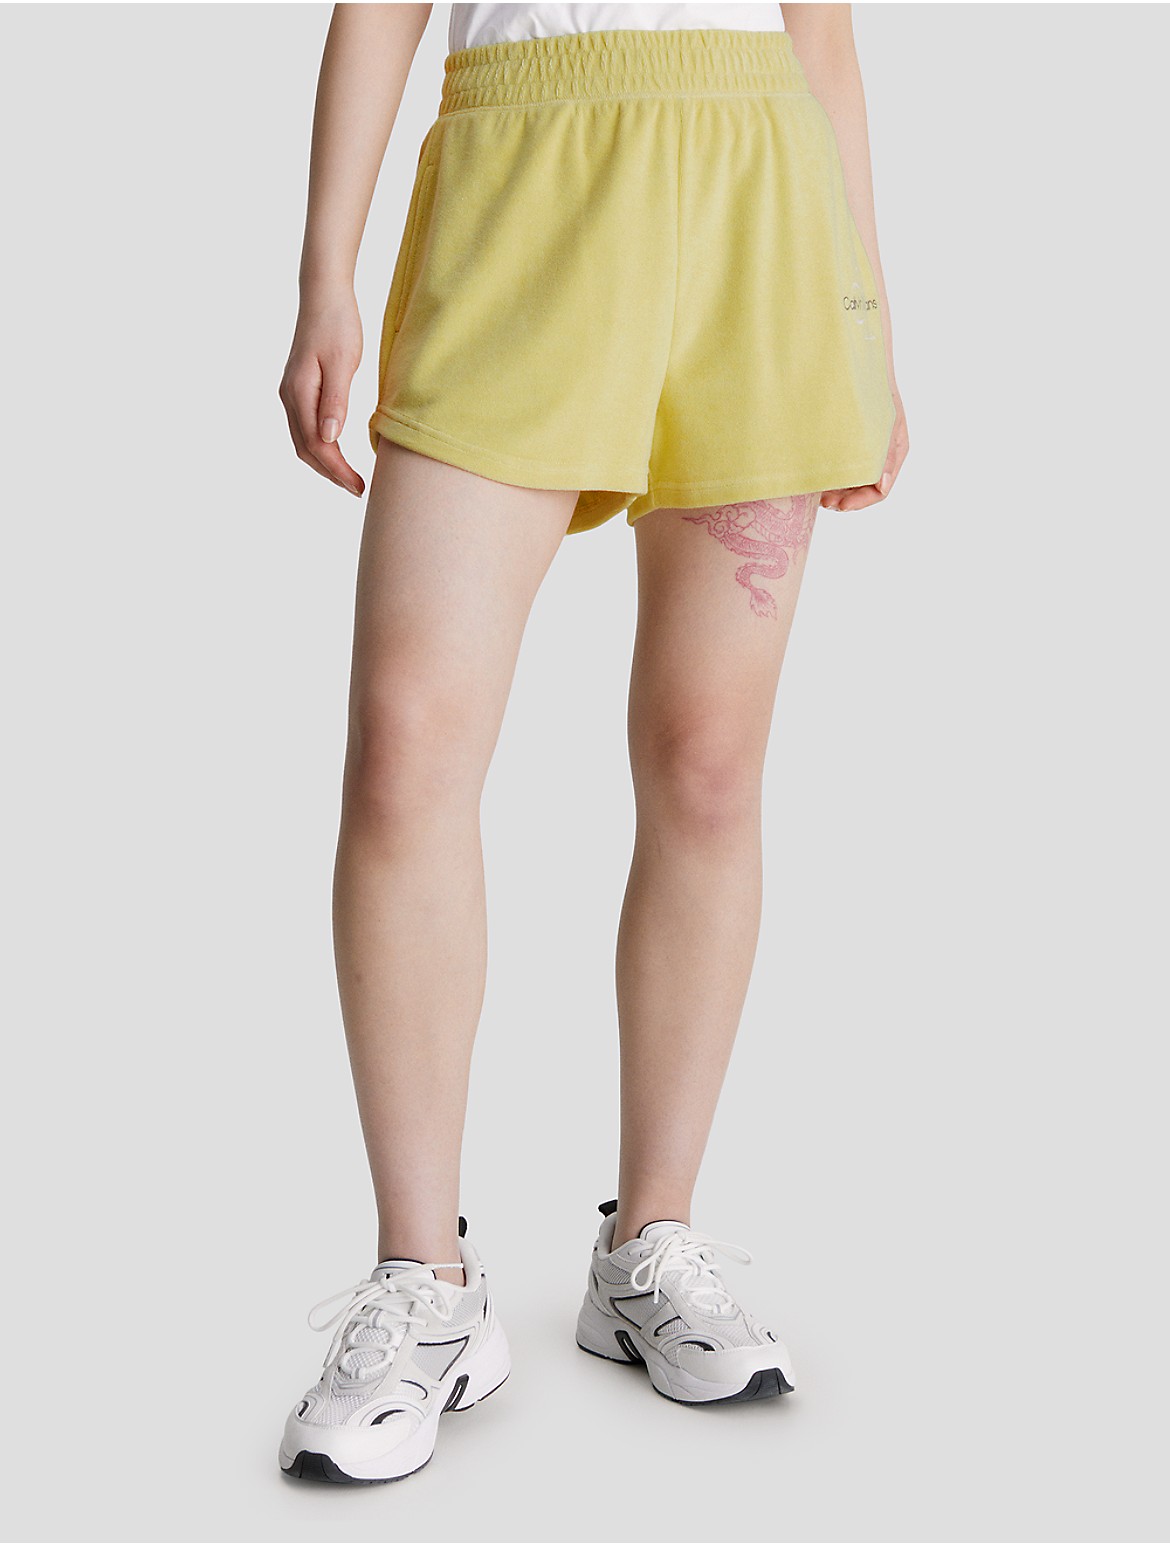 Calvin Klein Women's Terry Shorts - Yellow - XS